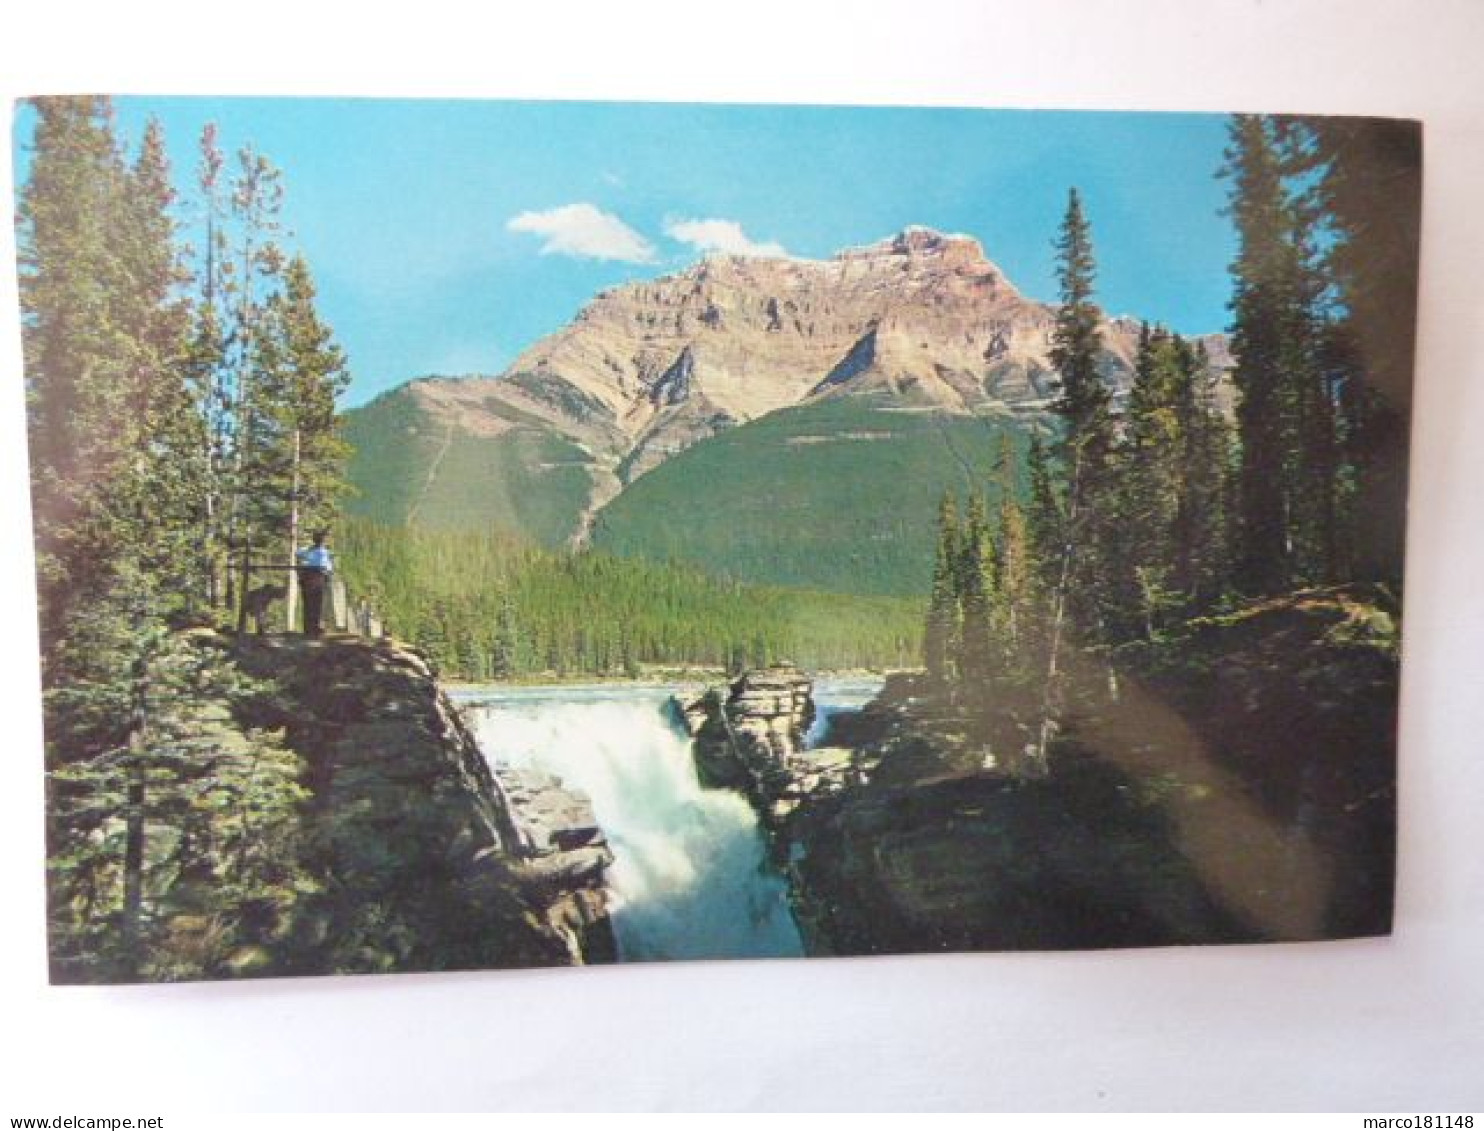 JASPER NATIONAL PARK - The Canadian Rock - Athabasca Falls - Jasper